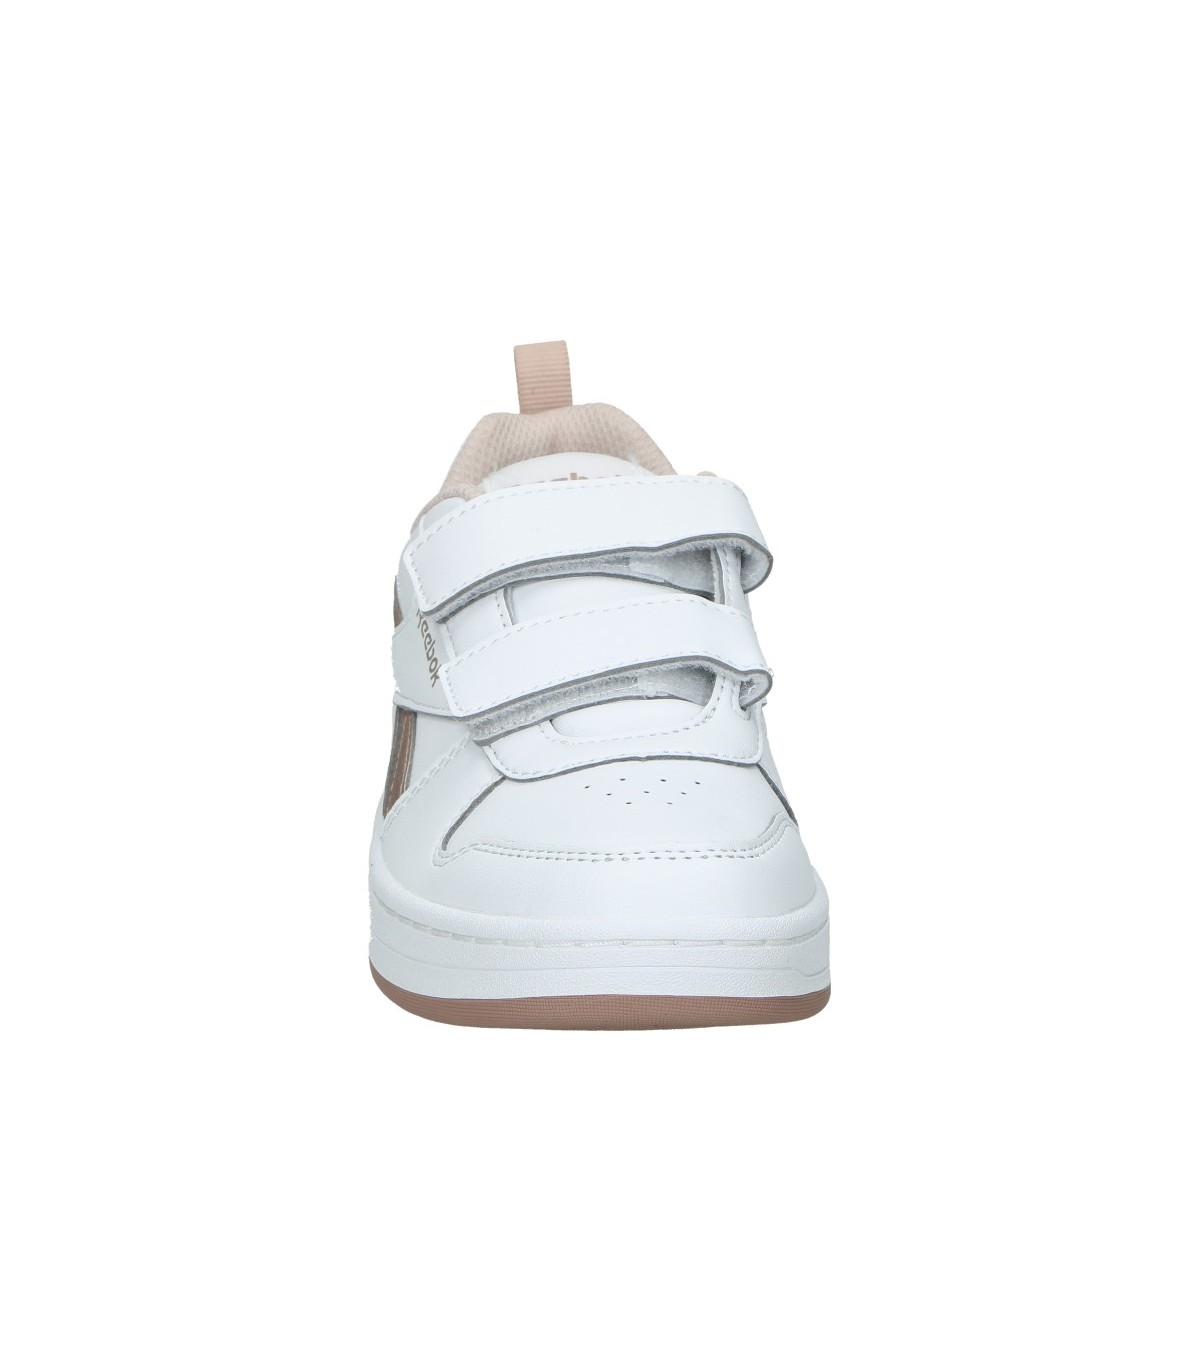 Zapatillas blancas de niña Reebok Royal online en MEGACALZADO